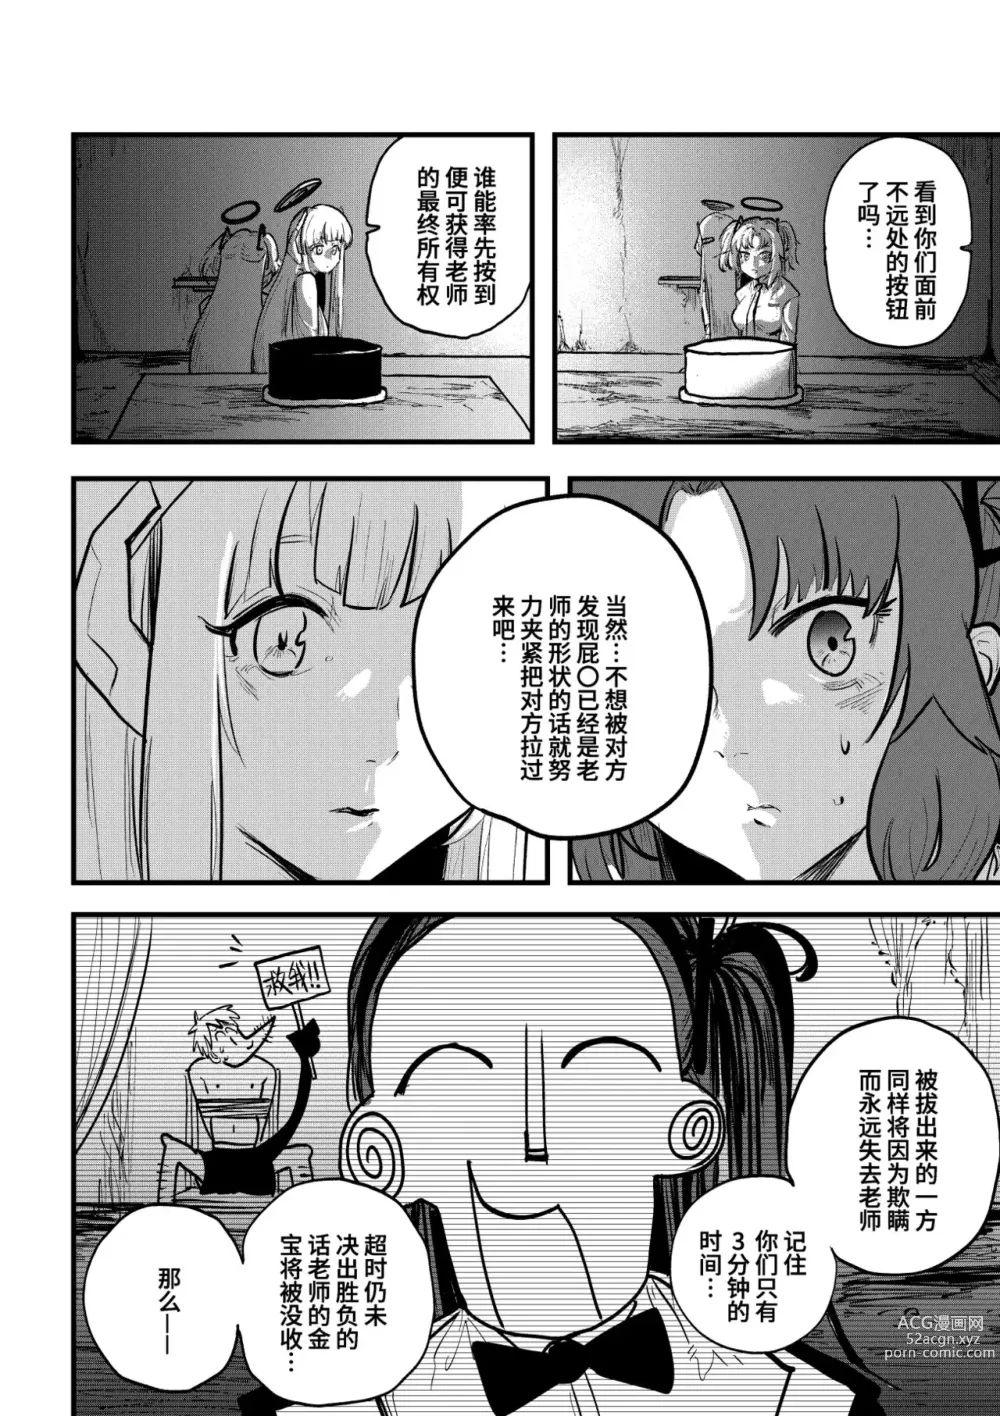 Page 6 of doujinshi Blue Saw